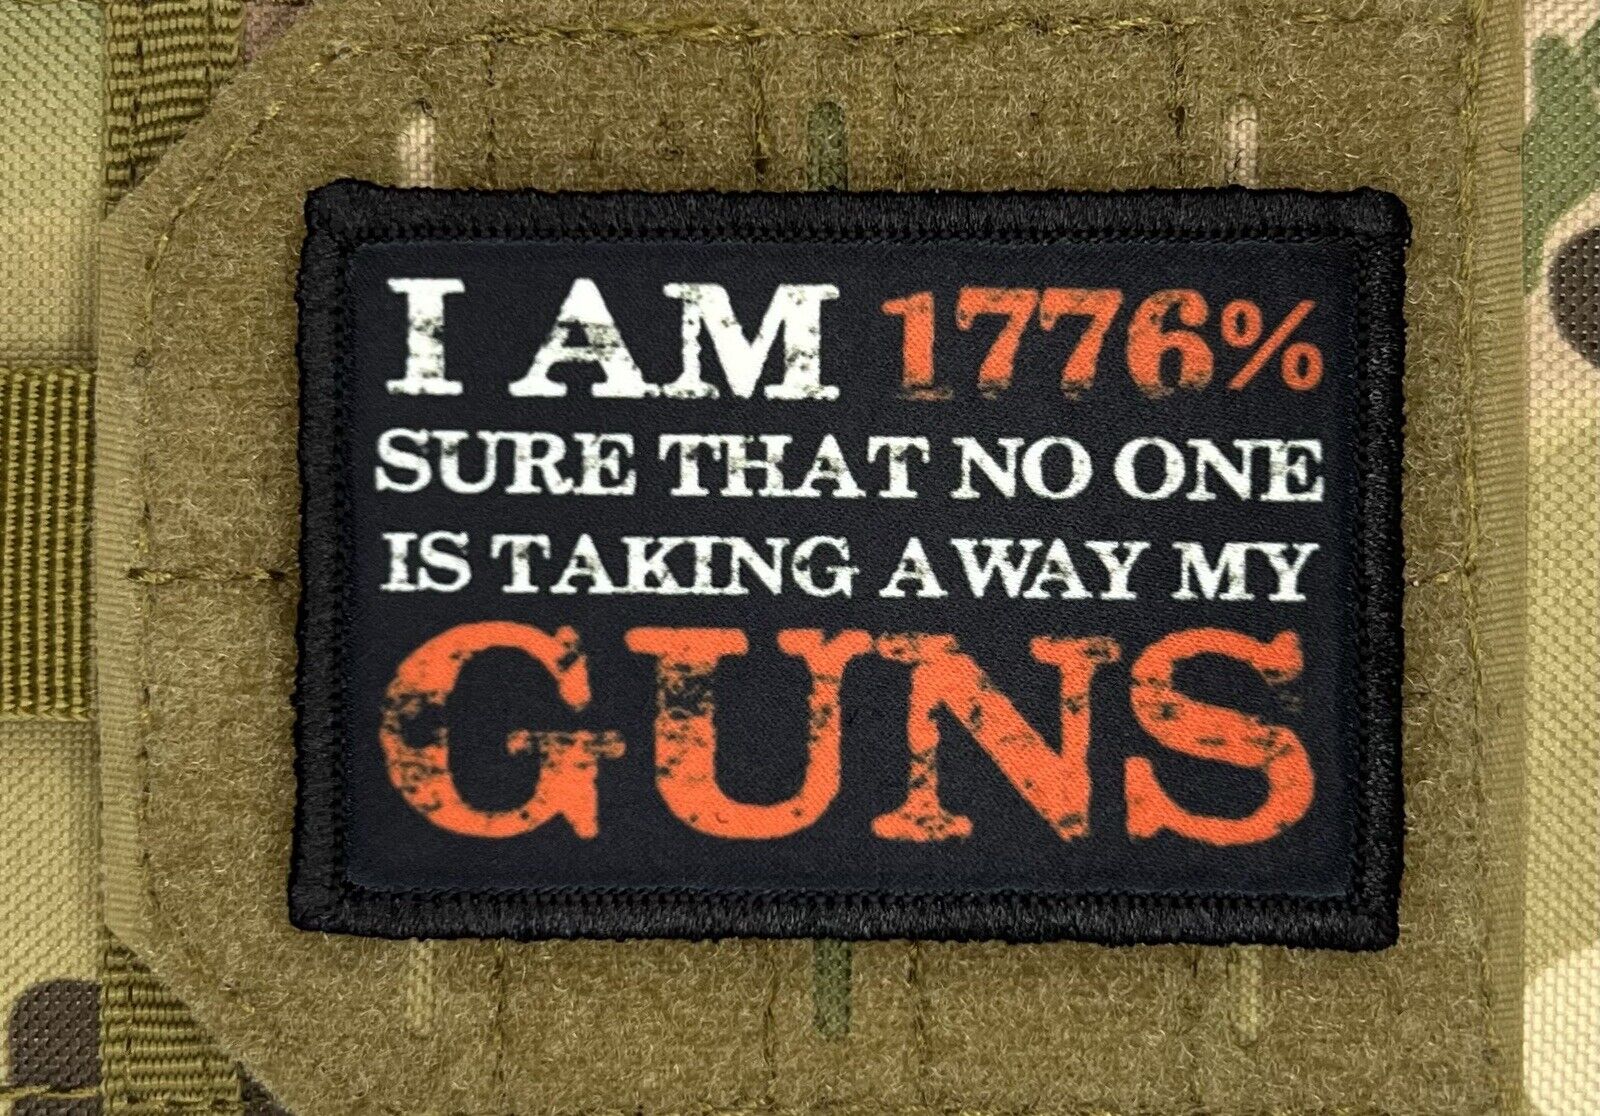 Gun Control 1776% Sure Patch / Military Badge Tactical Hook & Loop 406